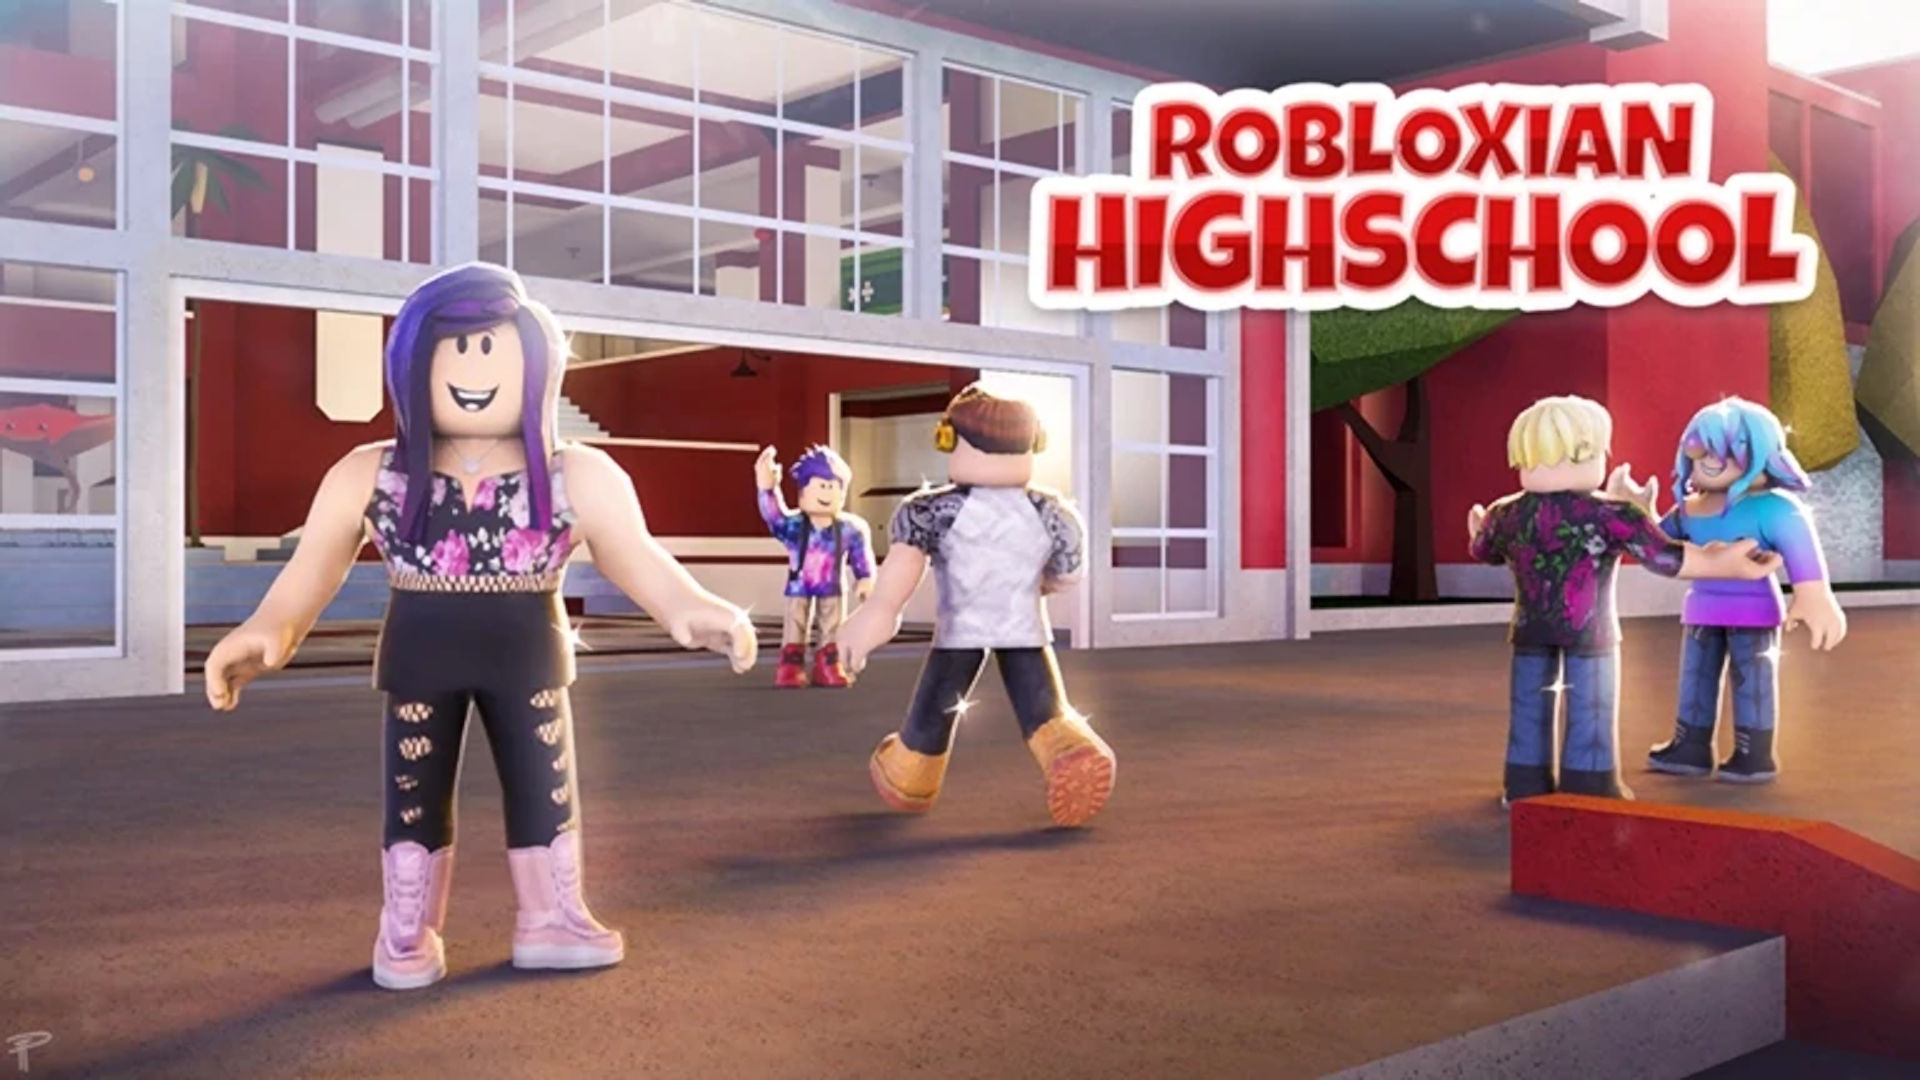 Roblox High School 2 - Roblox